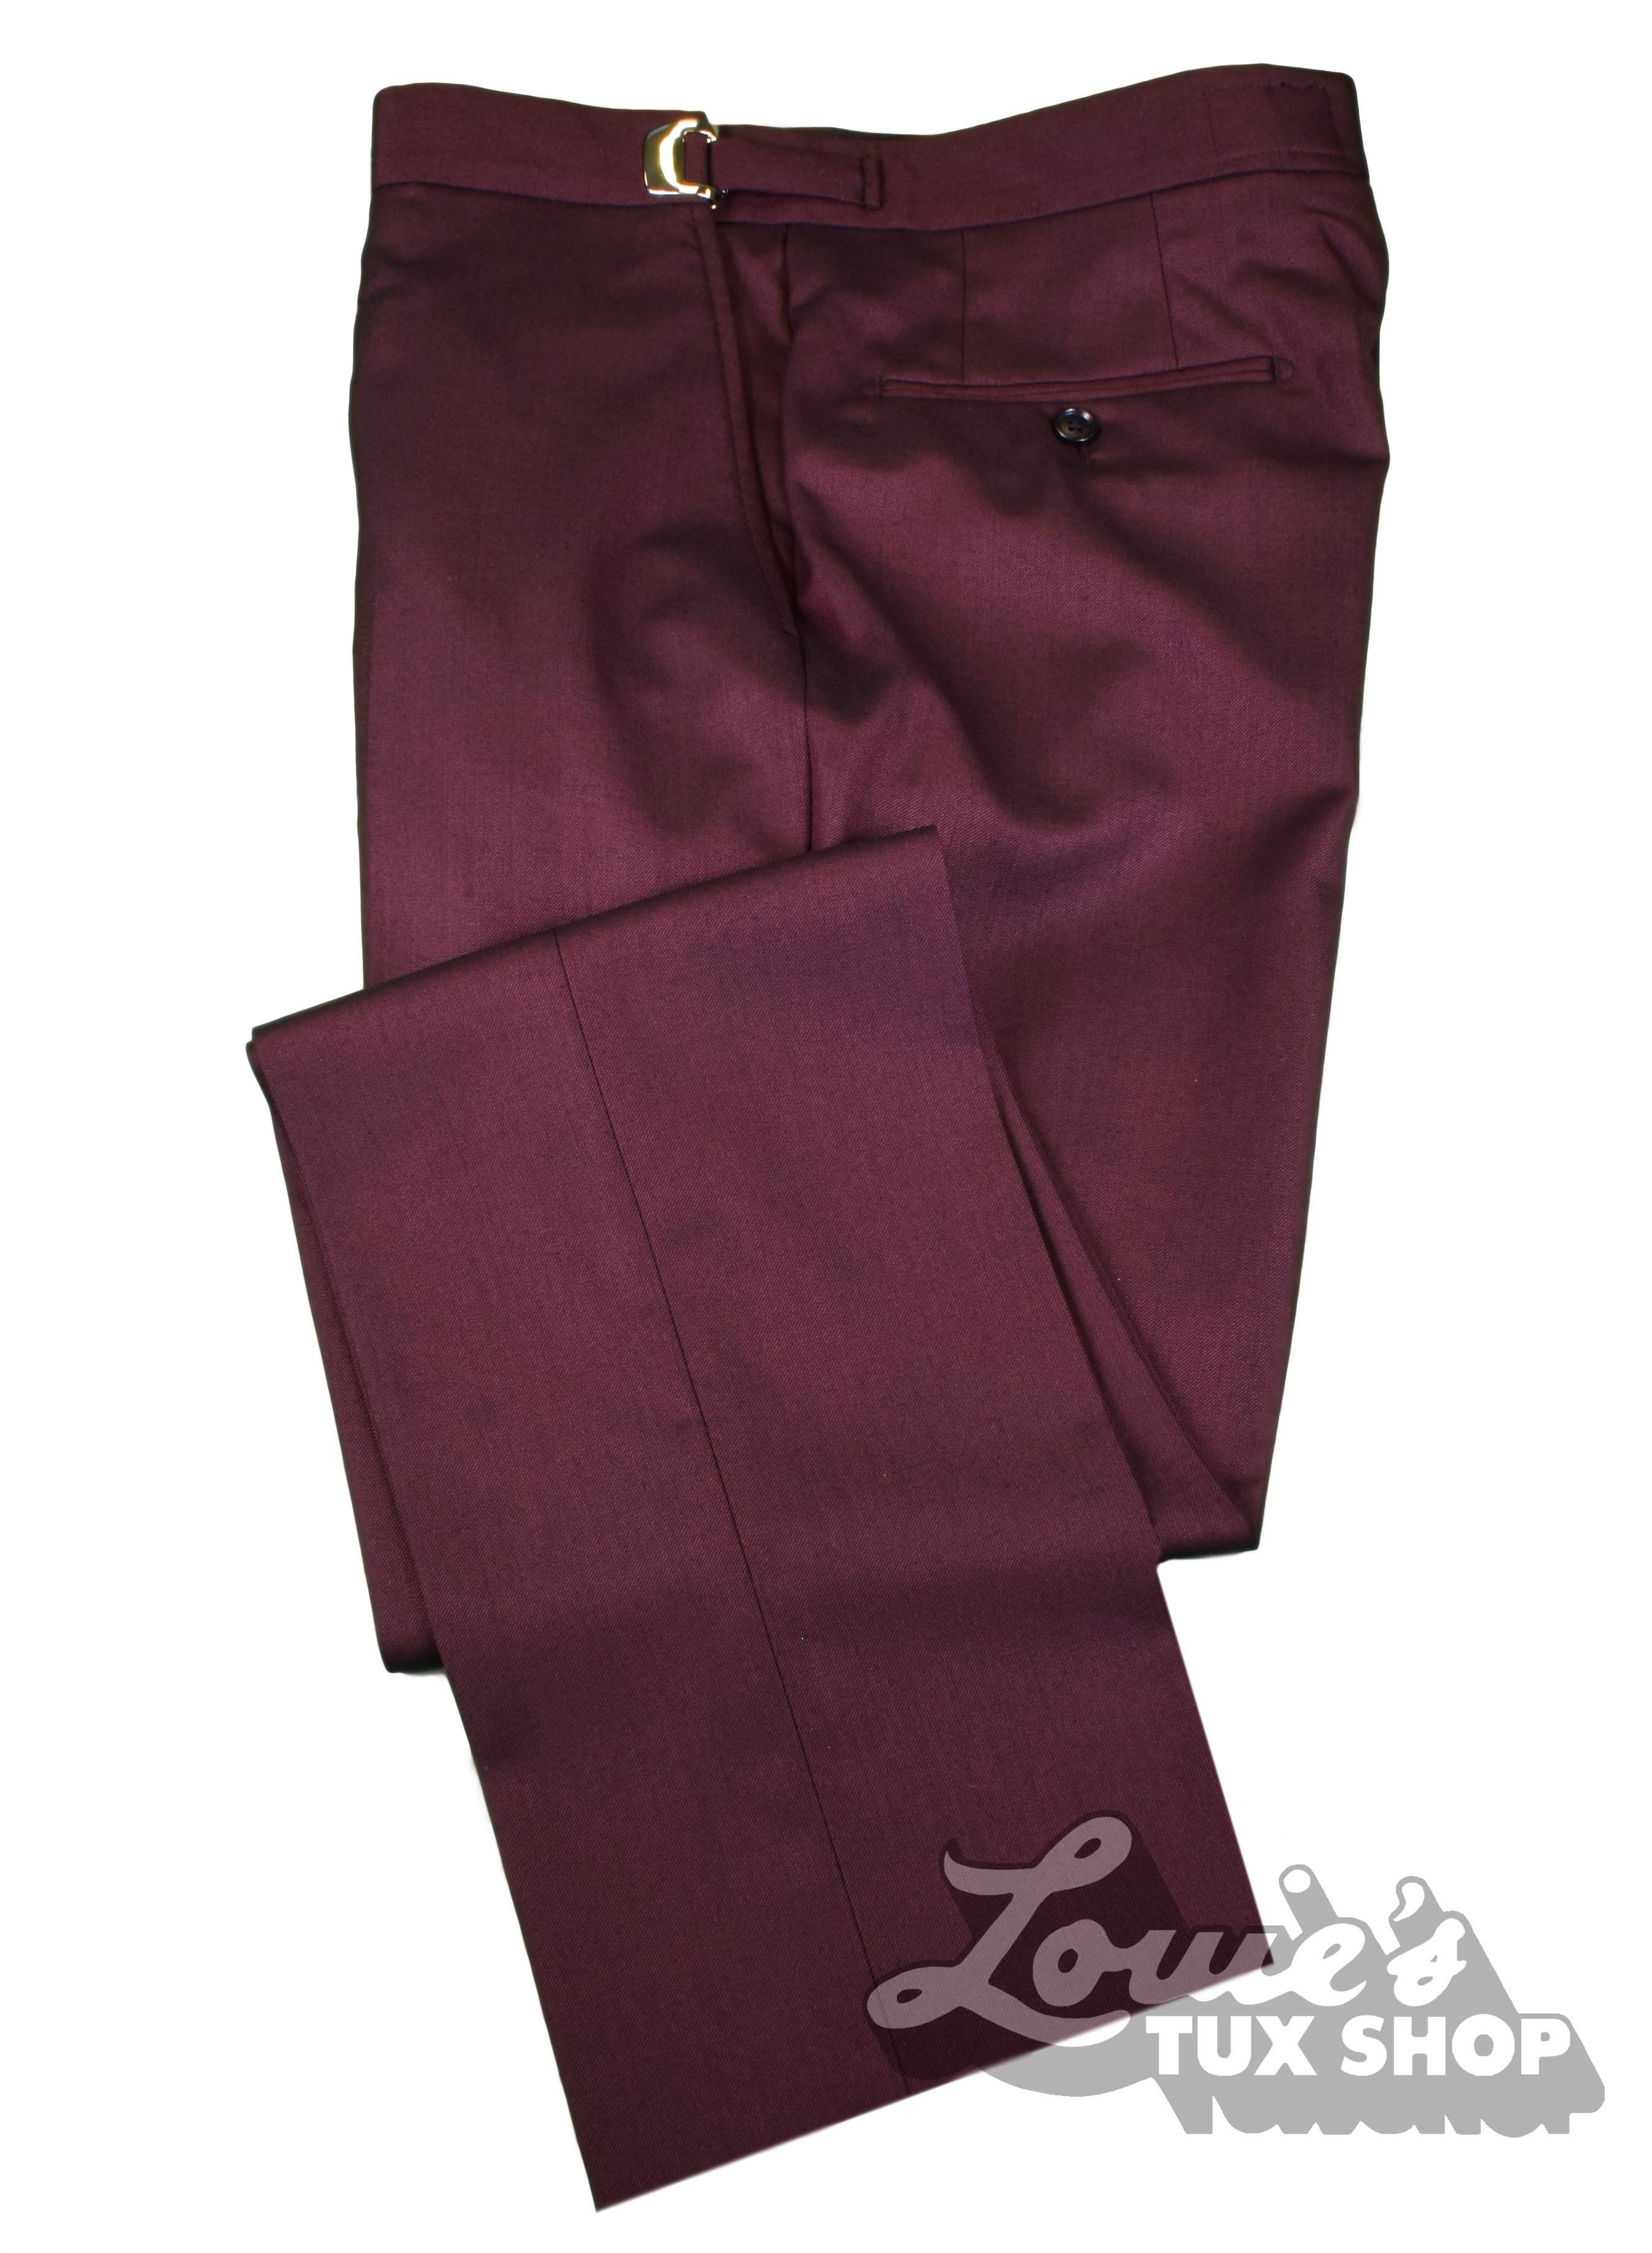 NWT Fabletics Maj Pocket Pants Burgundy Plus Size 1X(18) Foldover